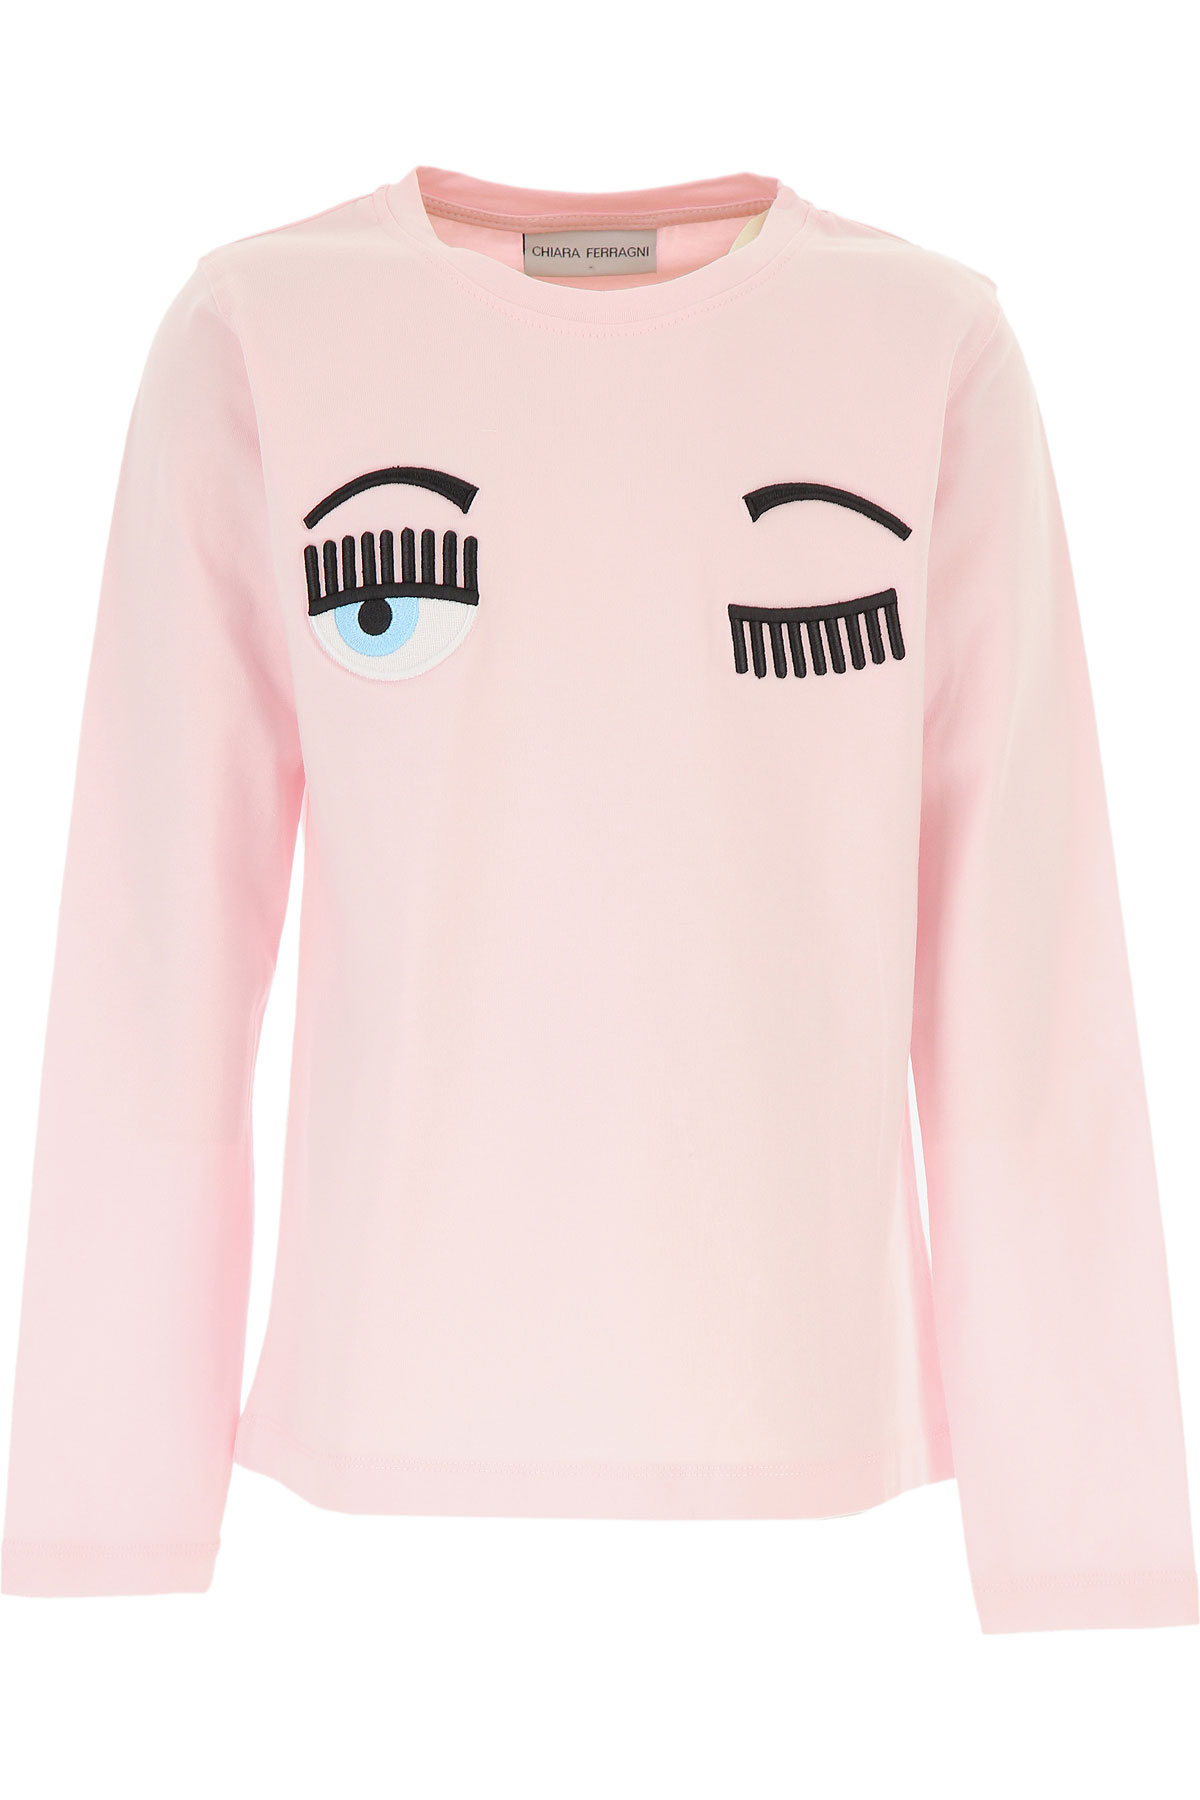 Chiara Ferragni Kinder T-Shirt für Mädchen Günstig im Sale, Pink, Baumwolle, 2017, 10Y 12Y 14Y 8Y